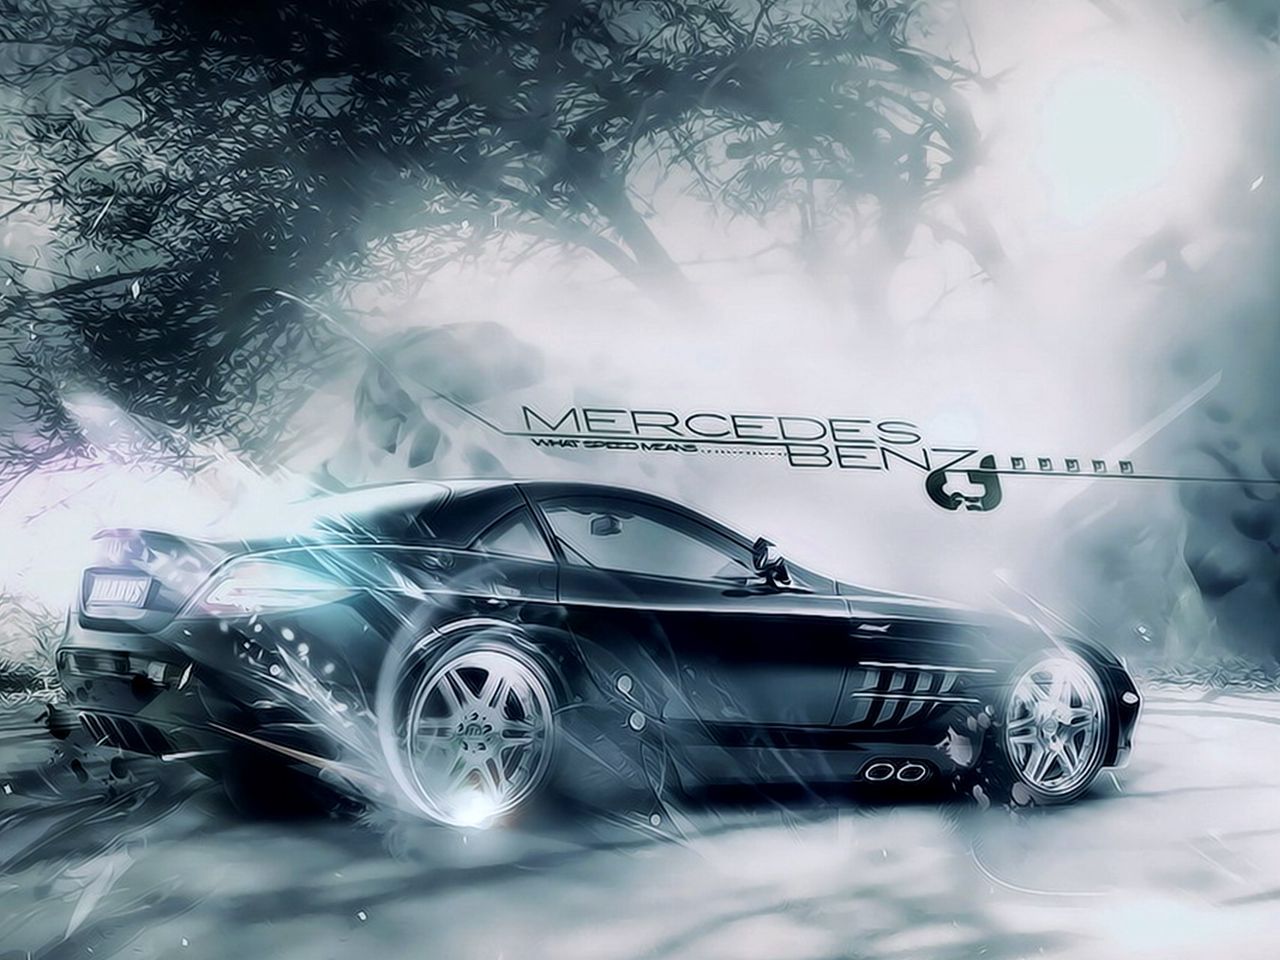 Benz Black Hd Wallpaper Free Download Black Painted - 3d Car Wallpaper Hd  1080p Free Download - 1280x960 Wallpaper 